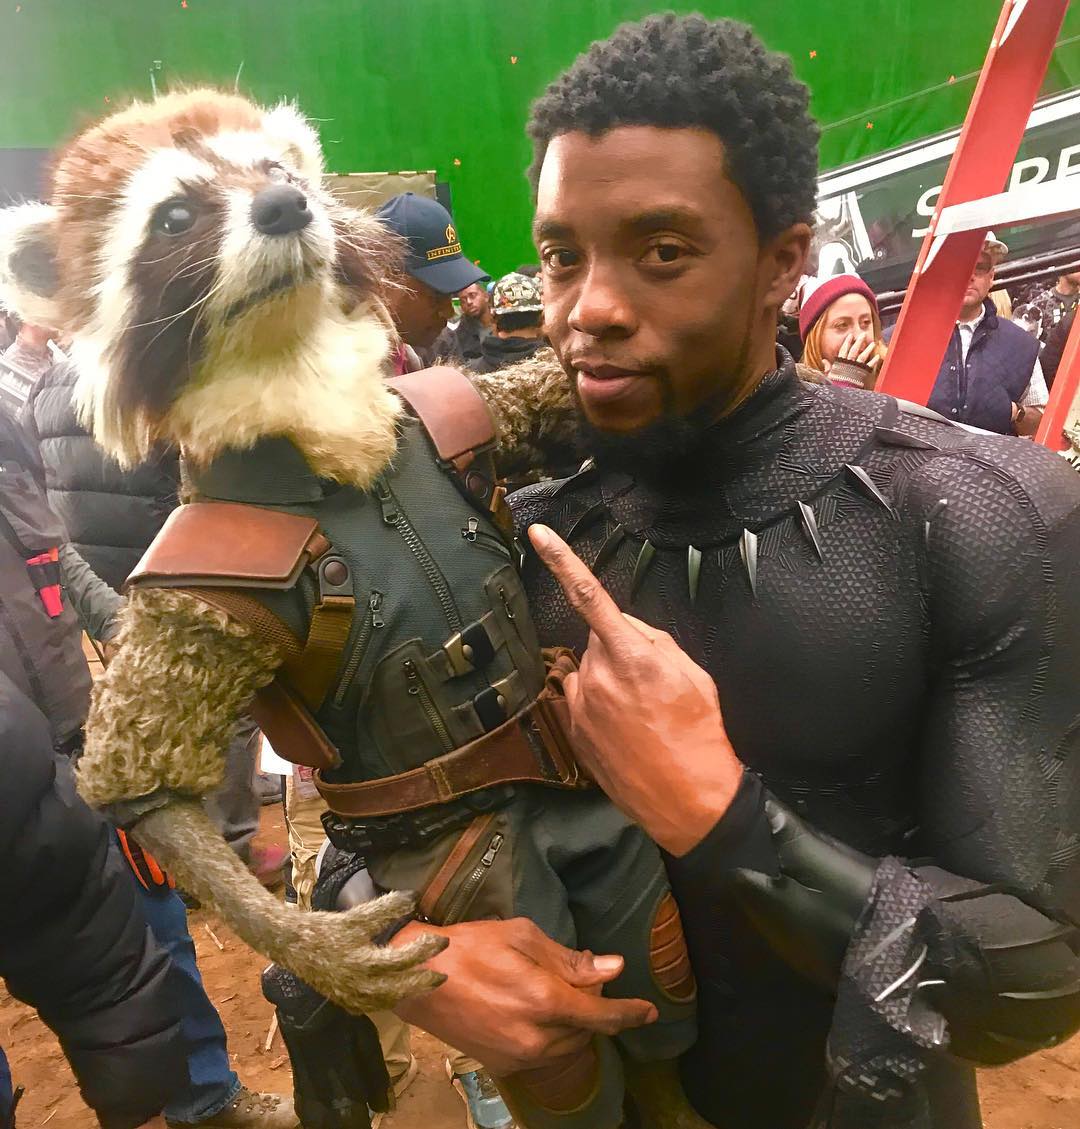 RT @ThatEricAlper: Chadwick Boseman posing with the Rocket Raccoon doll on the set of Avengers: Endgame, 2019 https://t.co/0PRg5DzmHX